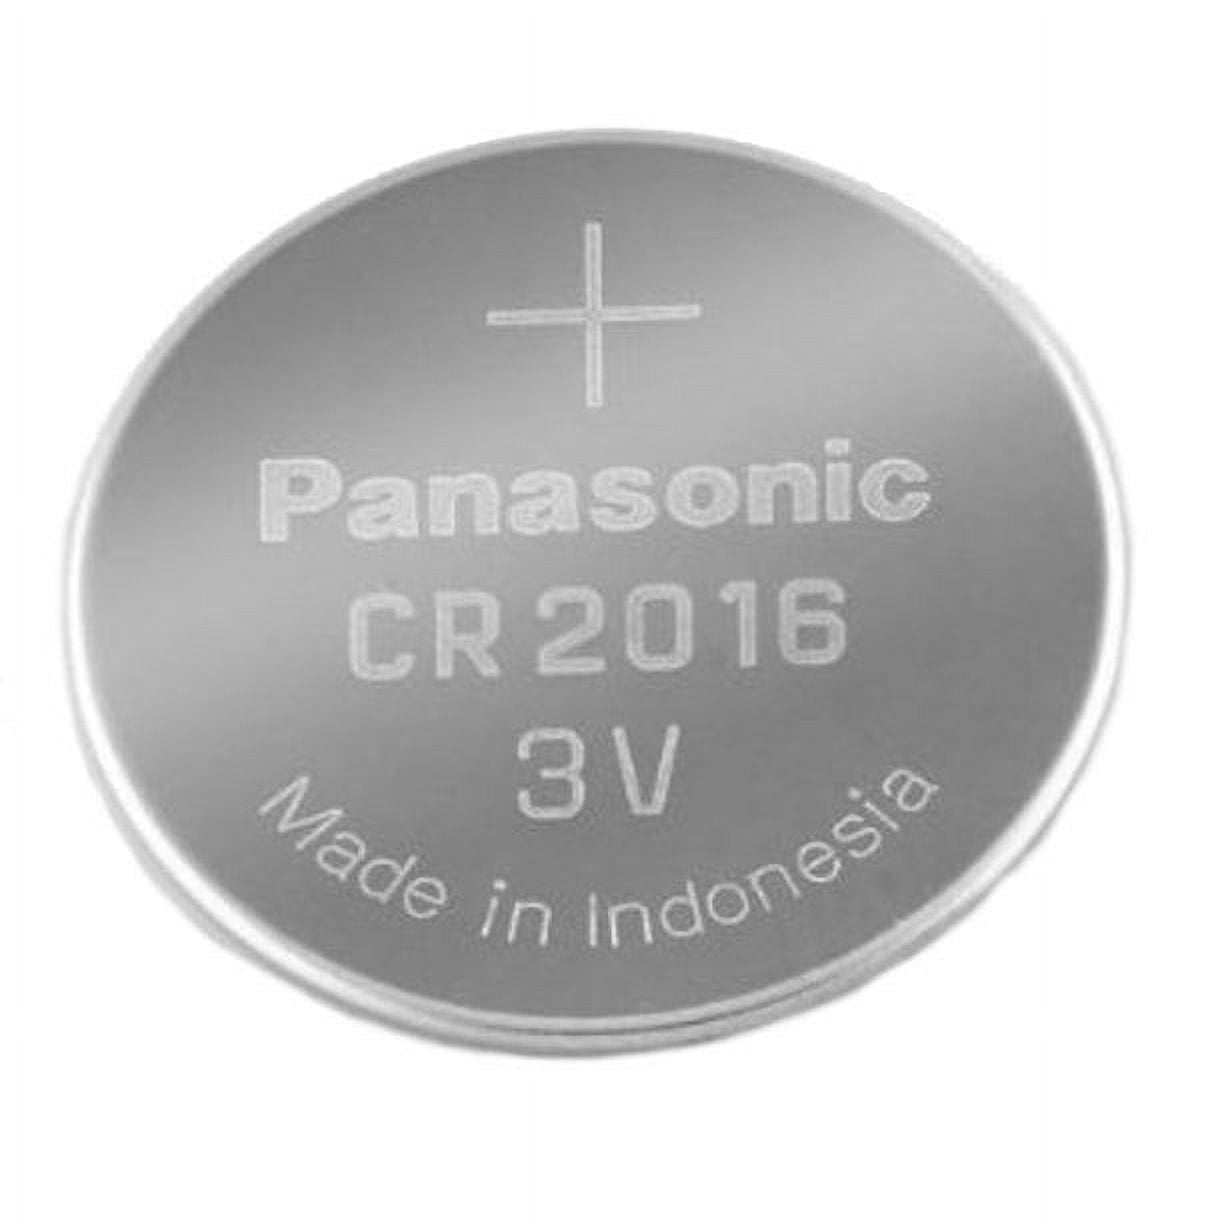 4 Piles Bouton Lithium Panasonic 3V / CR2016